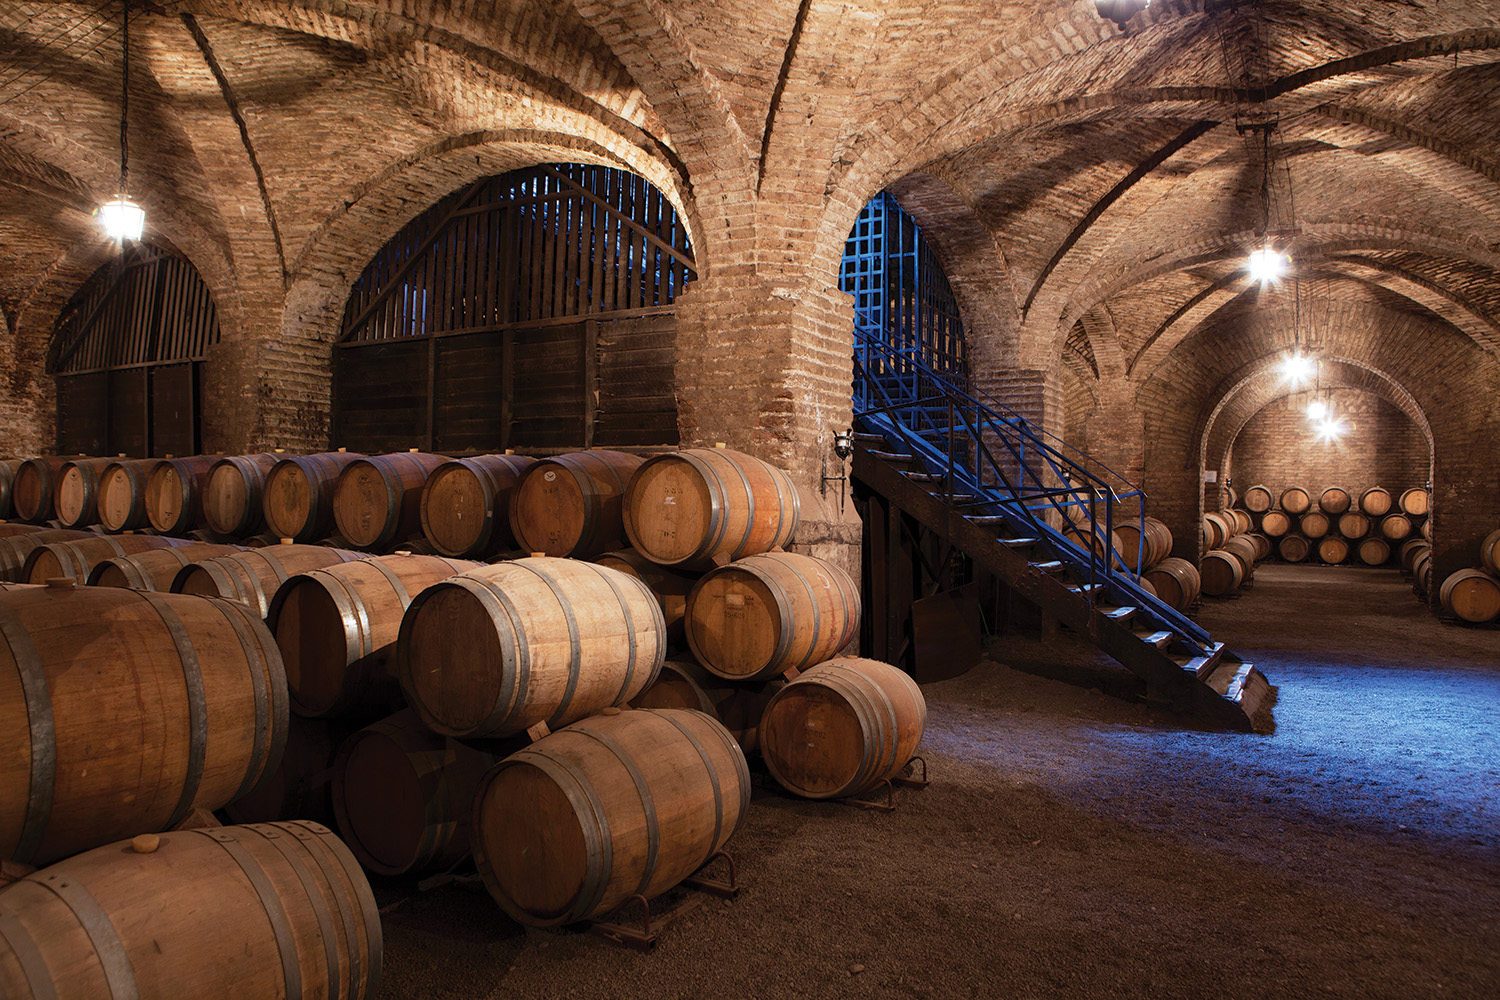 The historic wine cellars of Chile's Santa Carolina, established in 1875